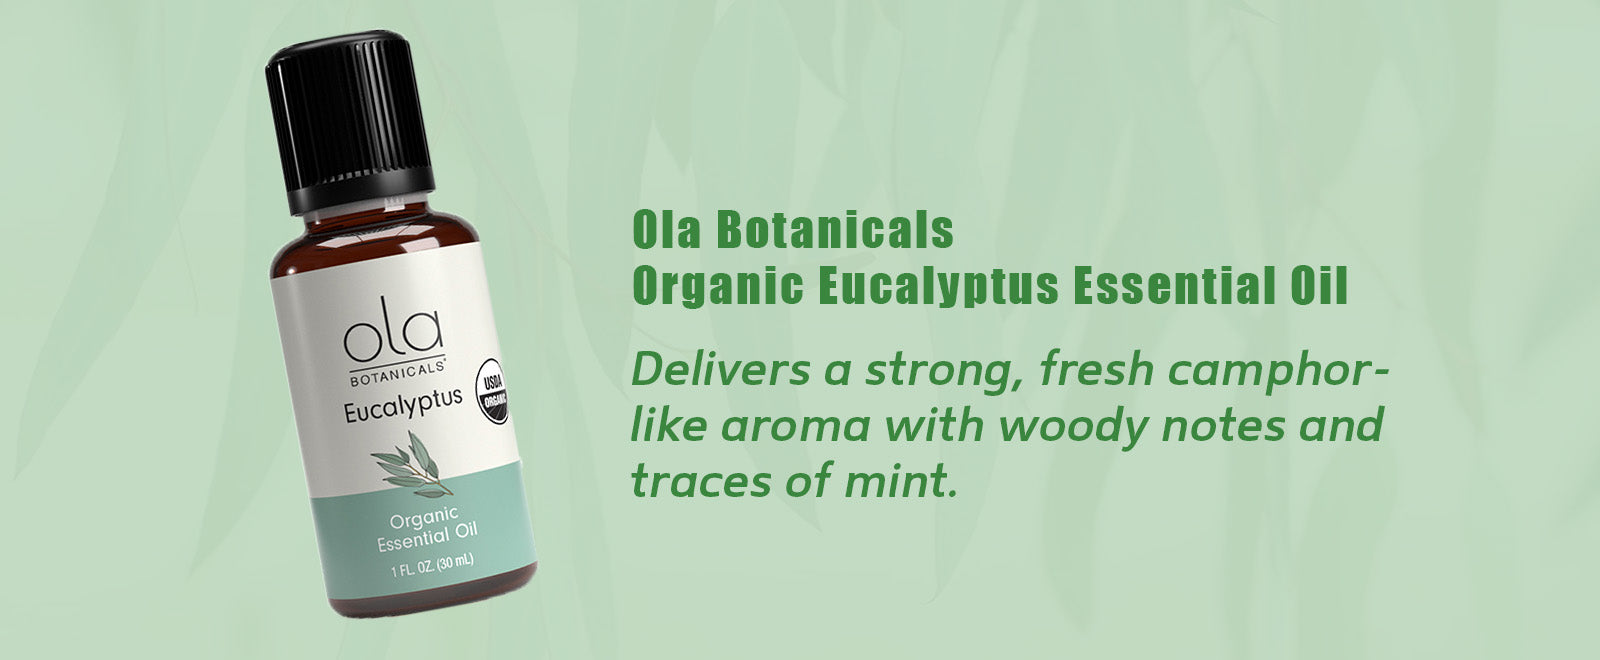 Ola Botanicals Organic Eucalyptus Essential Oil - Elevate Your Senses with Ola Botanicals® Organic Eucalyptus Essential Oil: Nature's Renewal for Mind and Body!